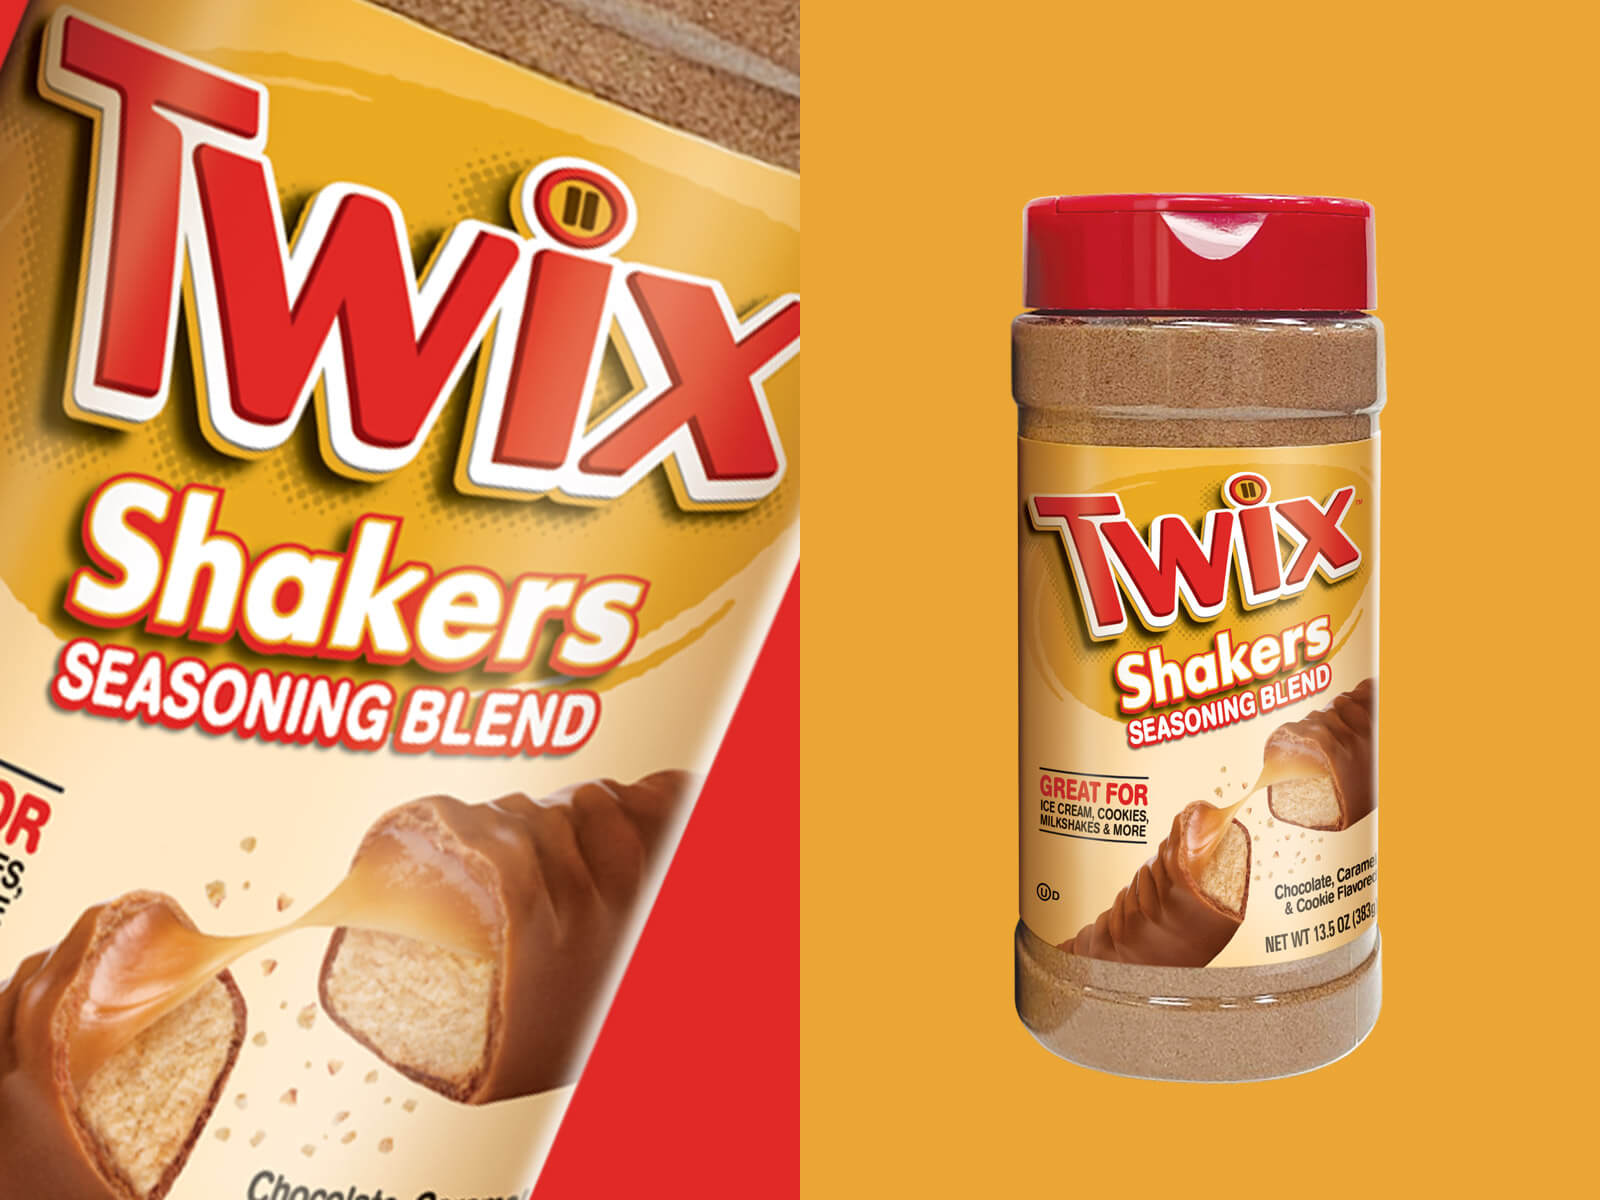 Twix Shakers Seasoning Blend (383g)